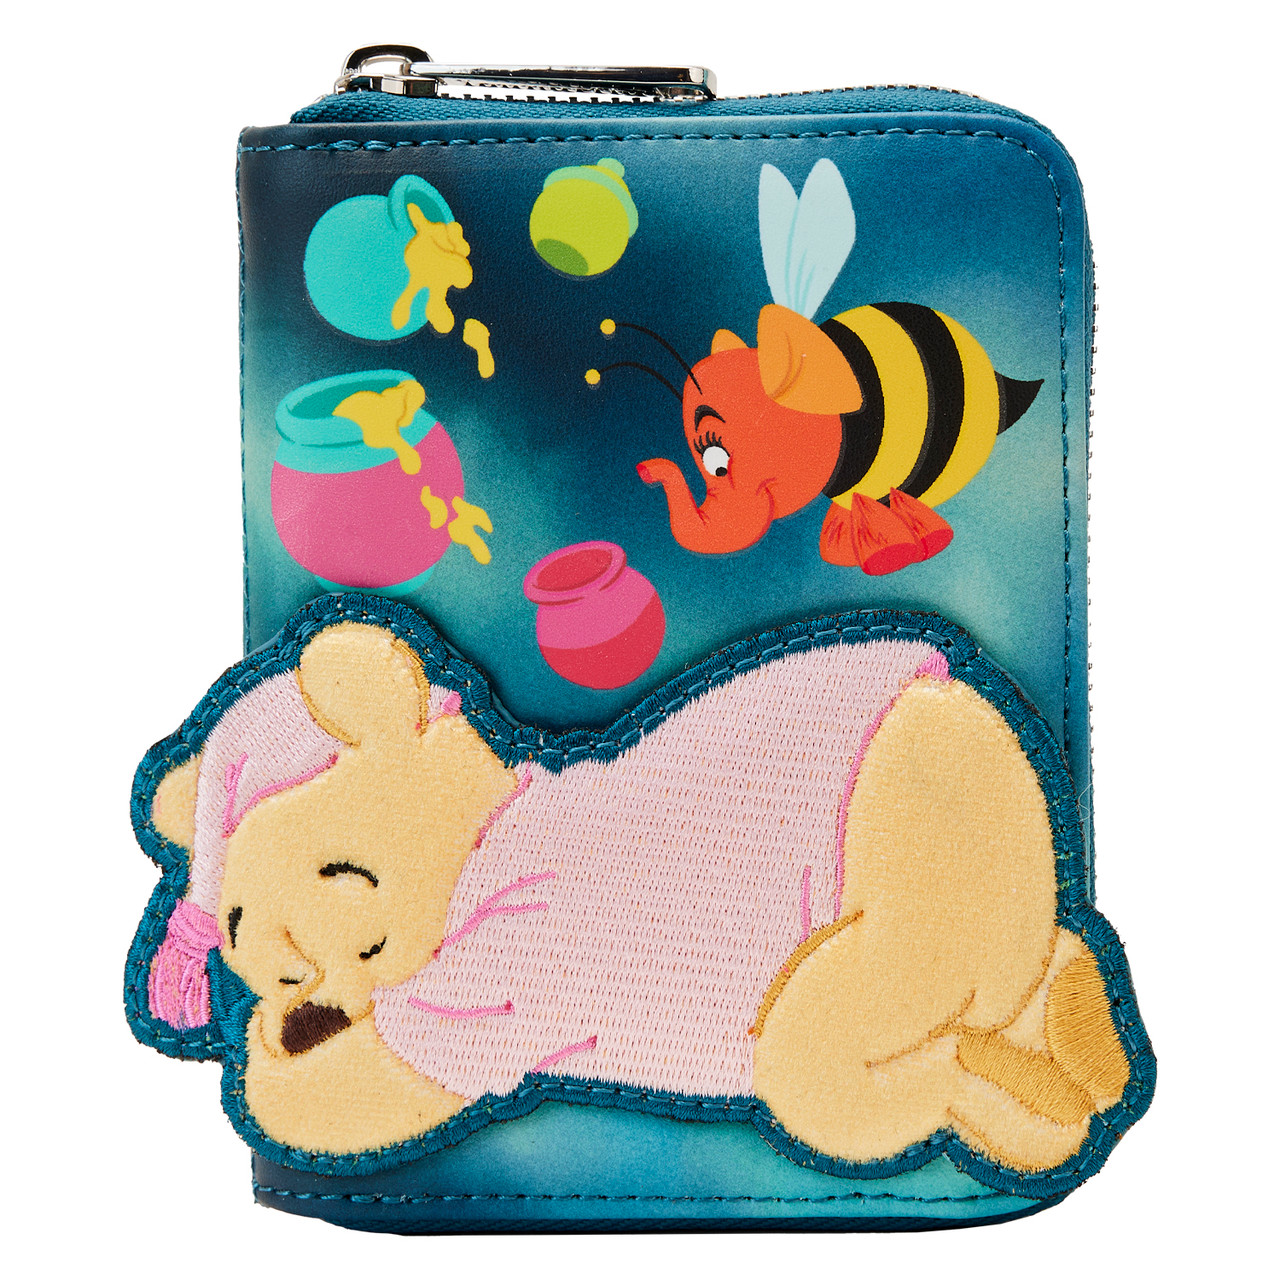 Disney Originals Winnie l'ourson set de cadeau, 39 cm, multicolore